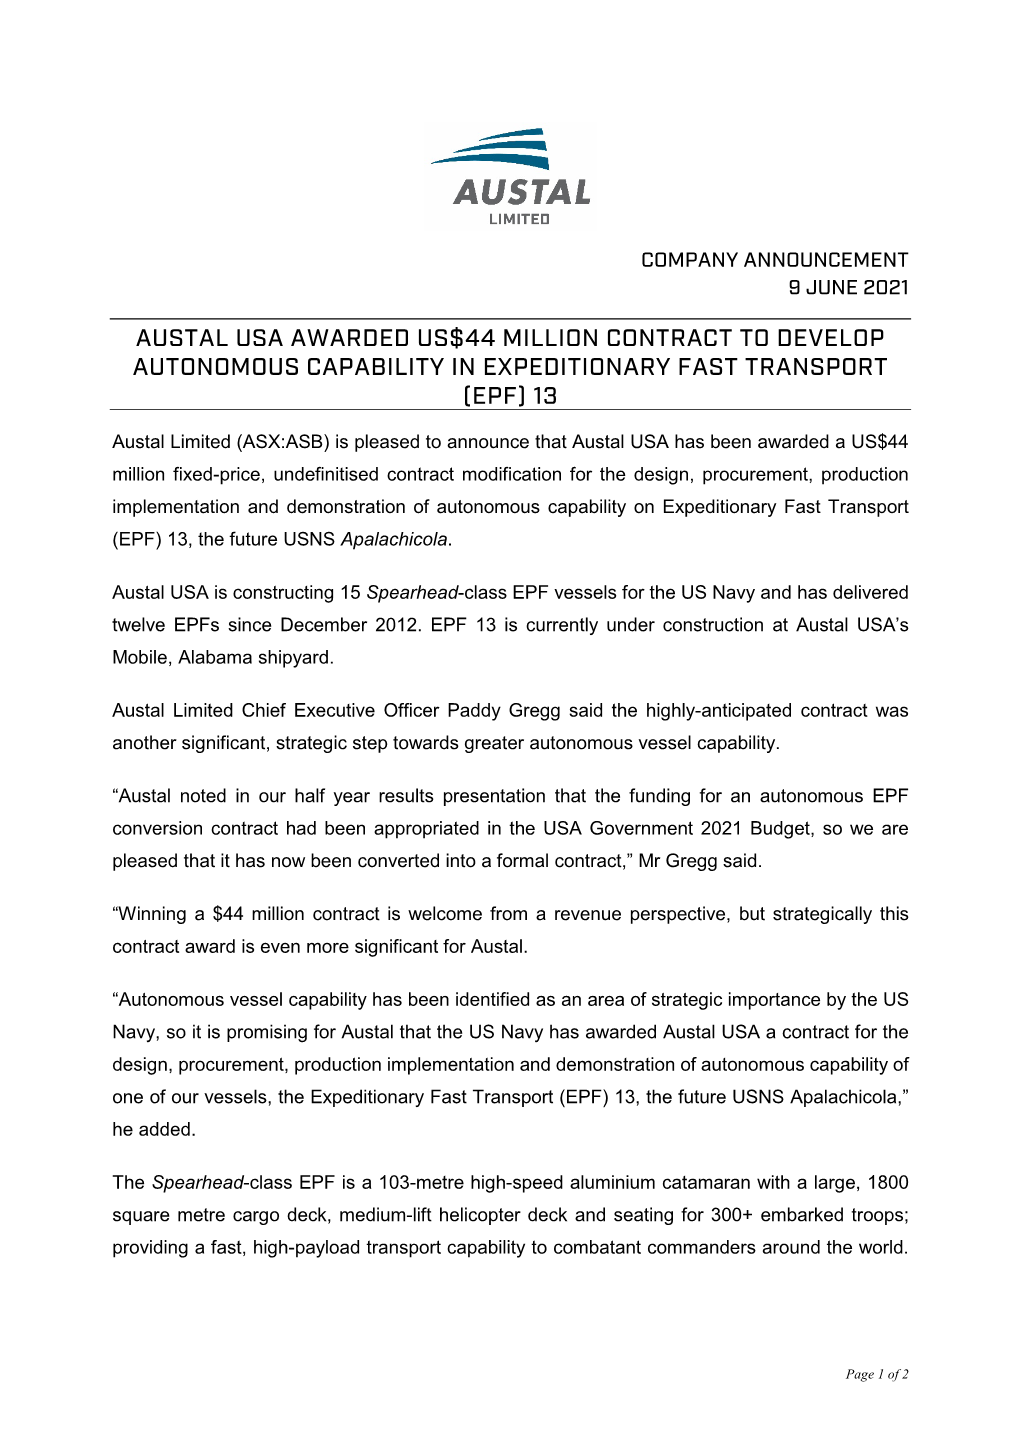 Austal USA Awarded US44M EPF Autonomous Capability Contract